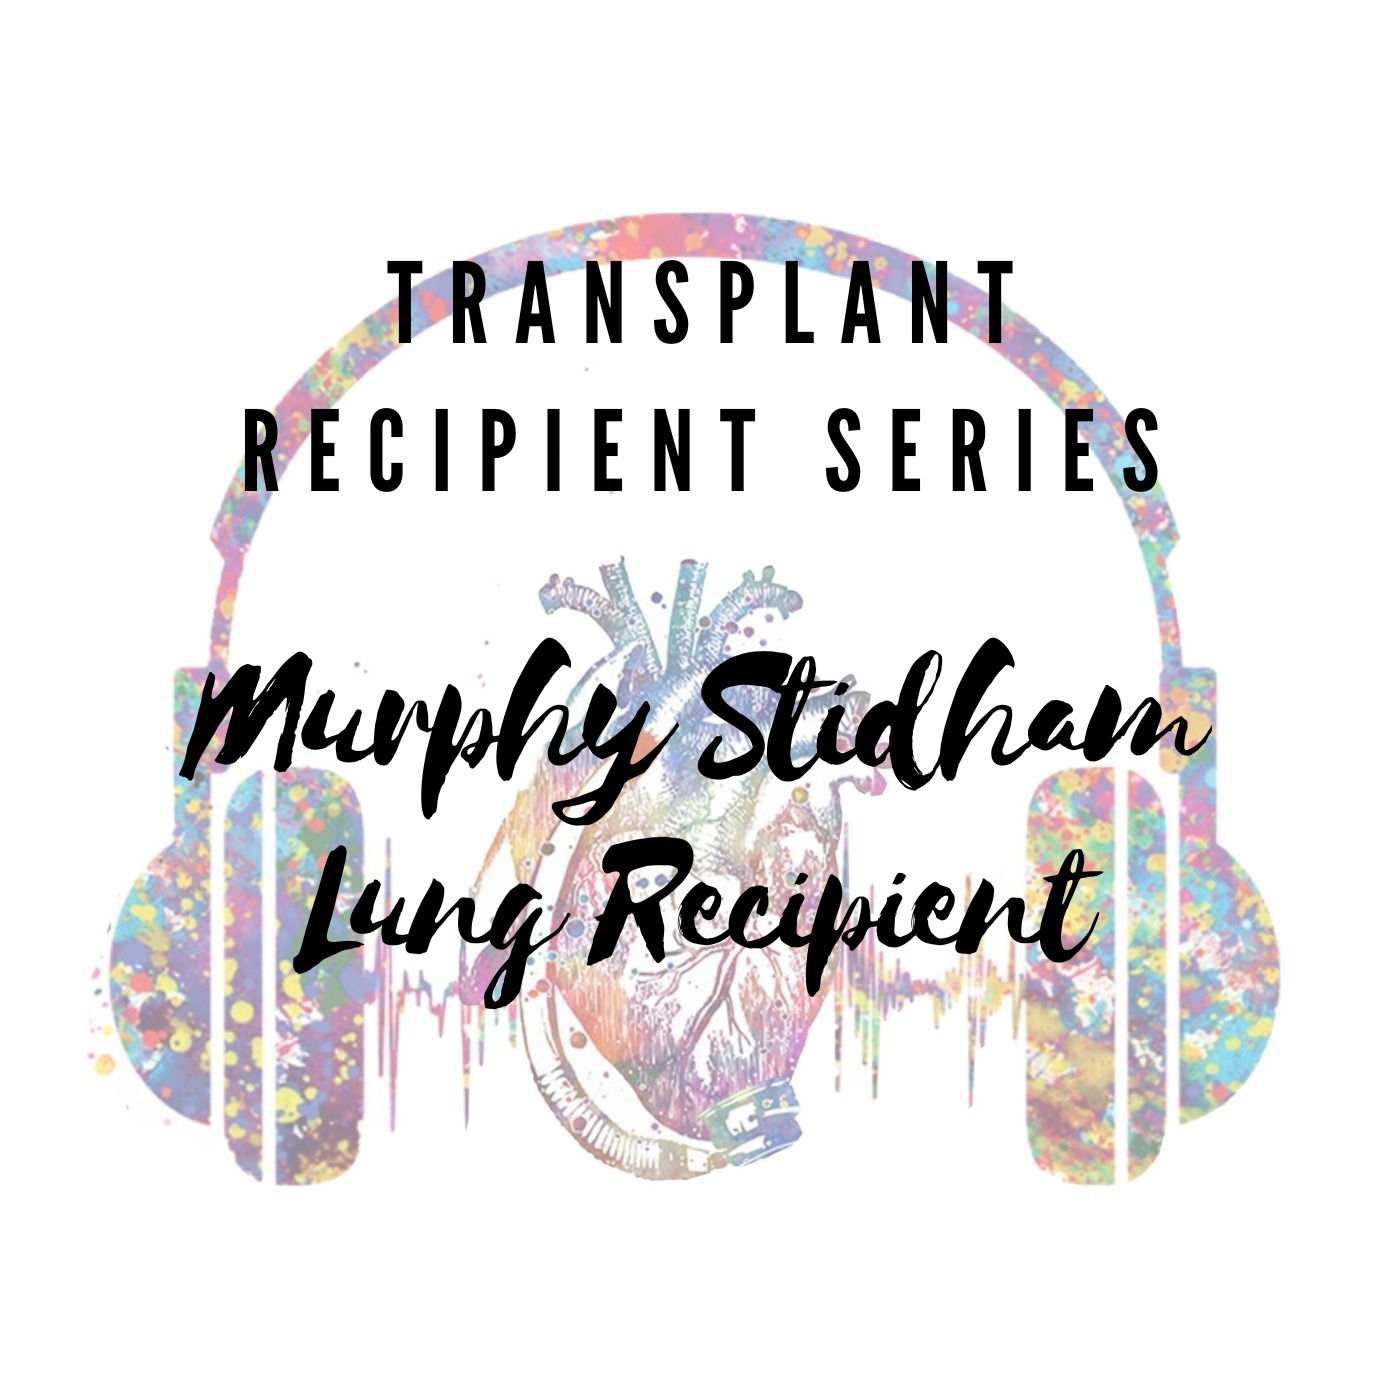 Episode 17: Transplant Recipient Series with special guest, Murphy Stidham